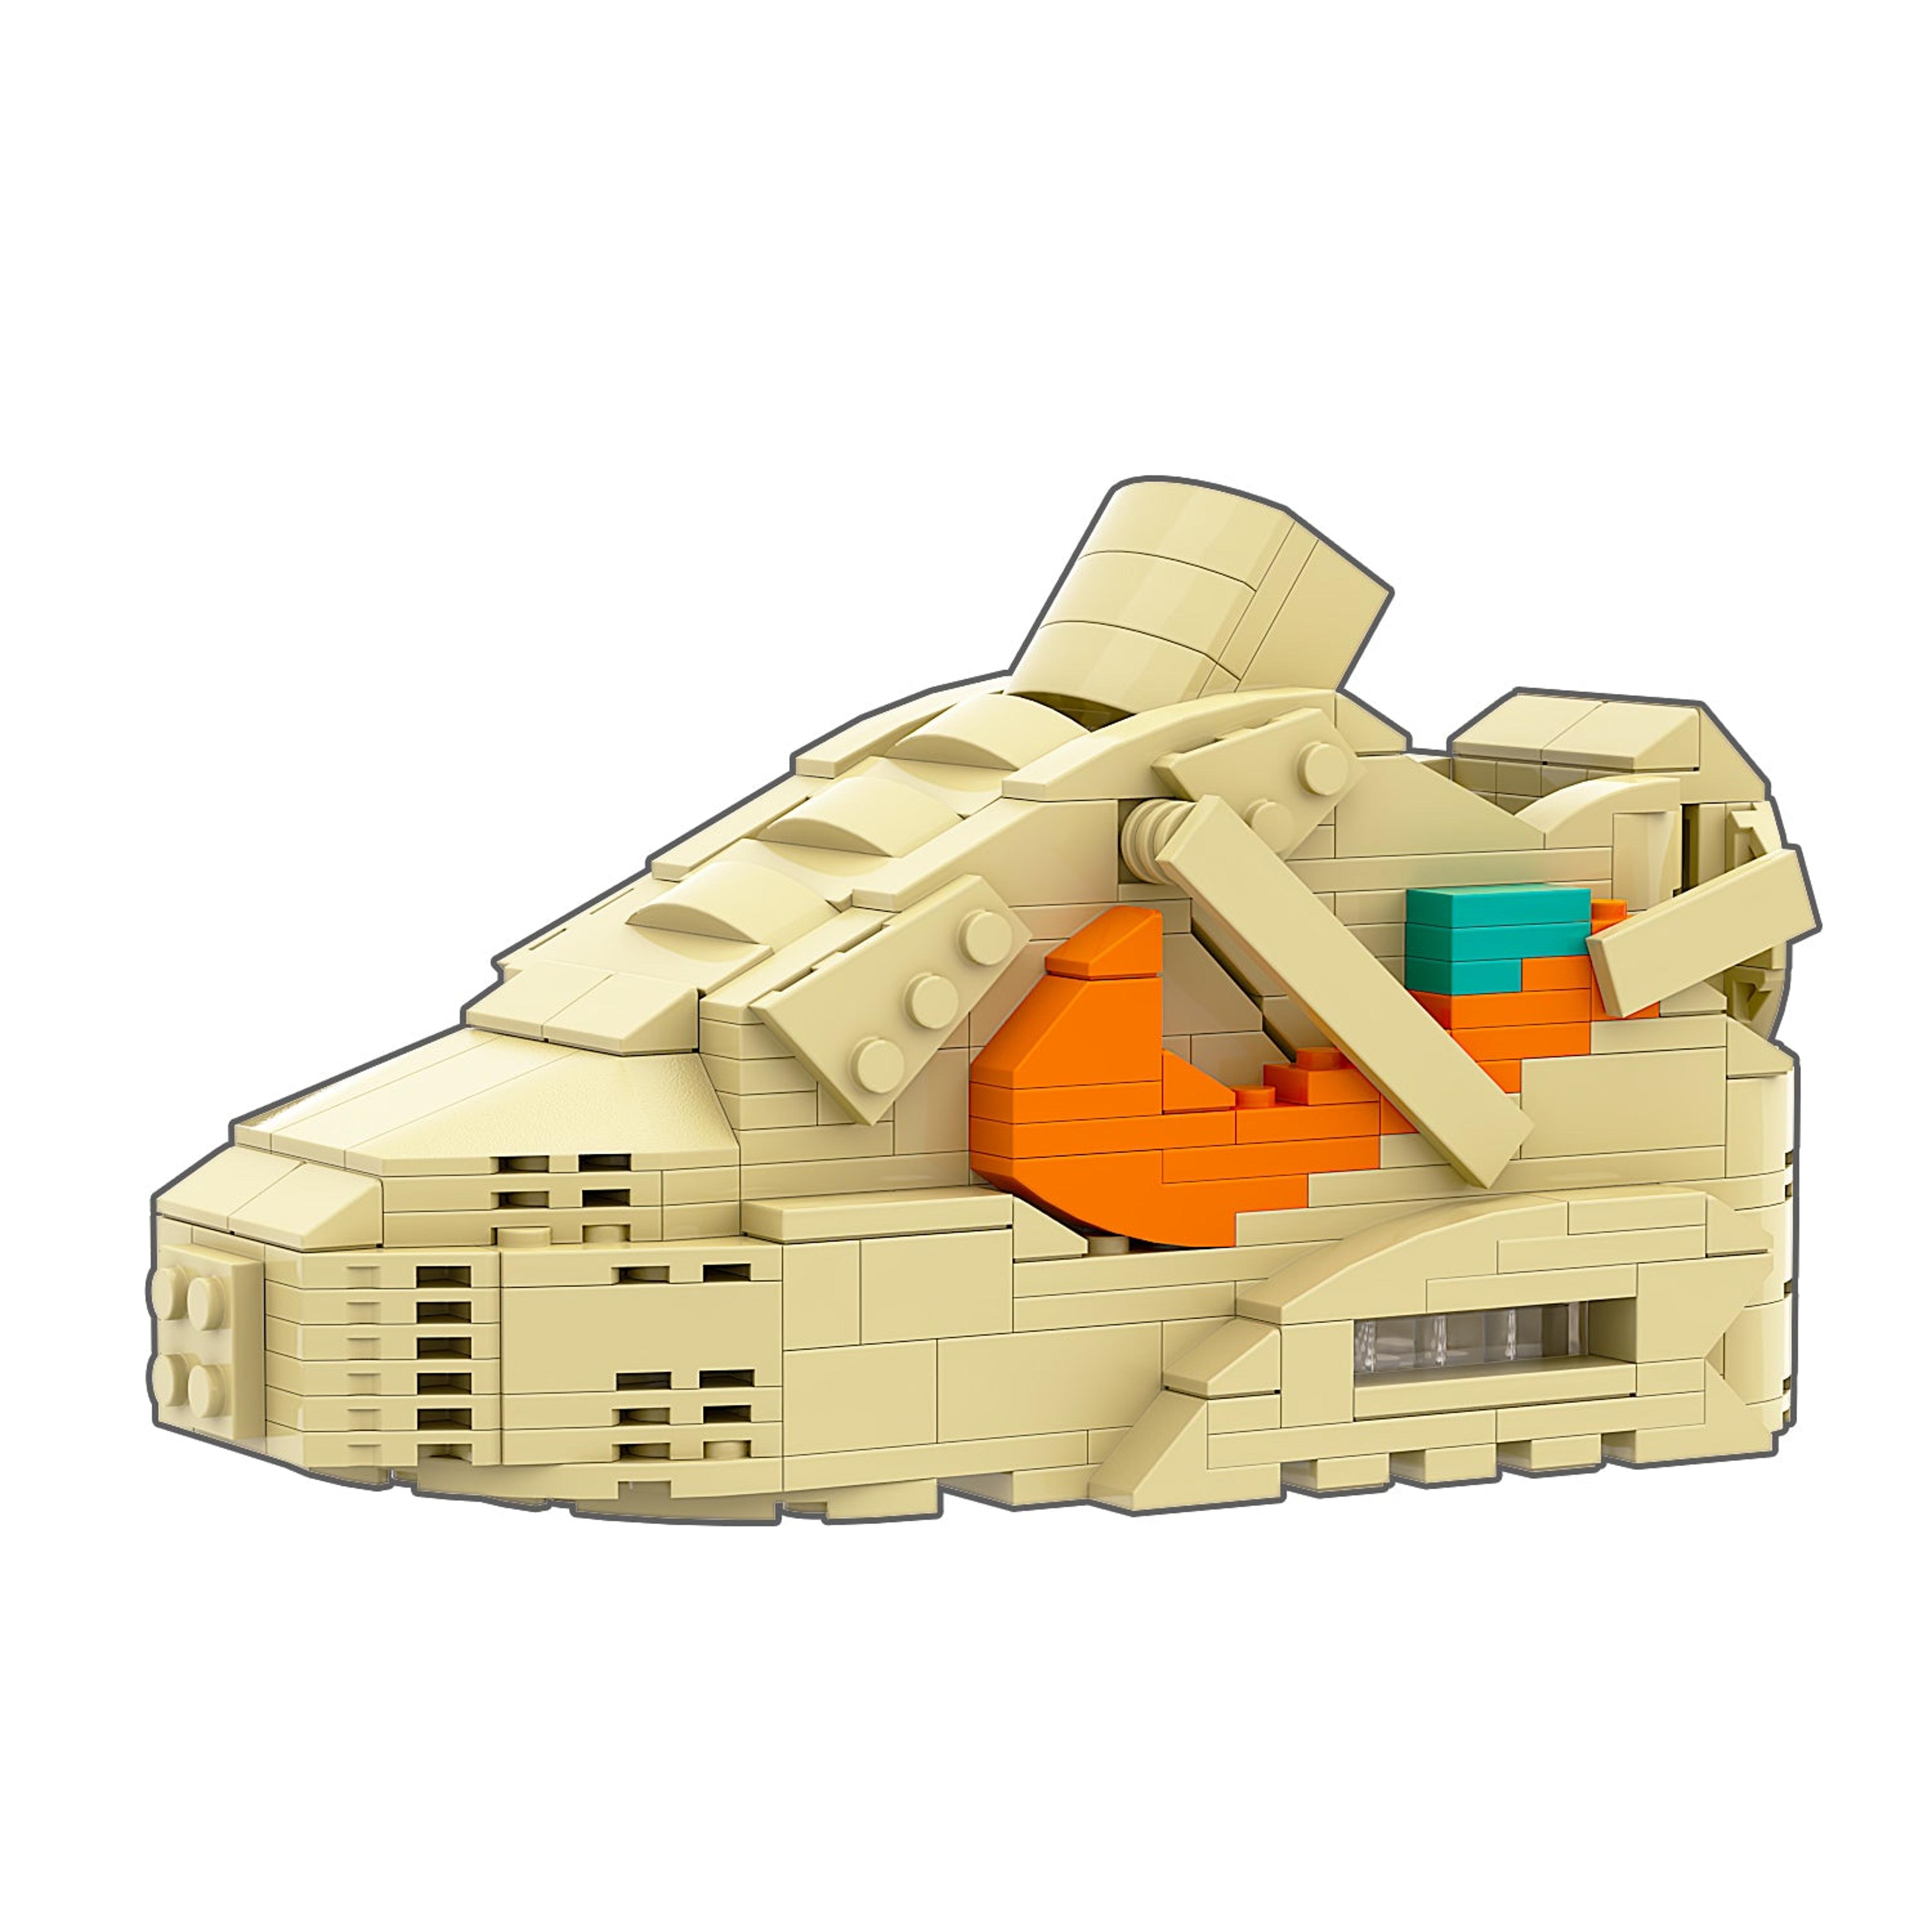 Alternate View 2 of REGULAR Air Max 90 "Desert Ore" Sneaker Bricks with Mini Figure